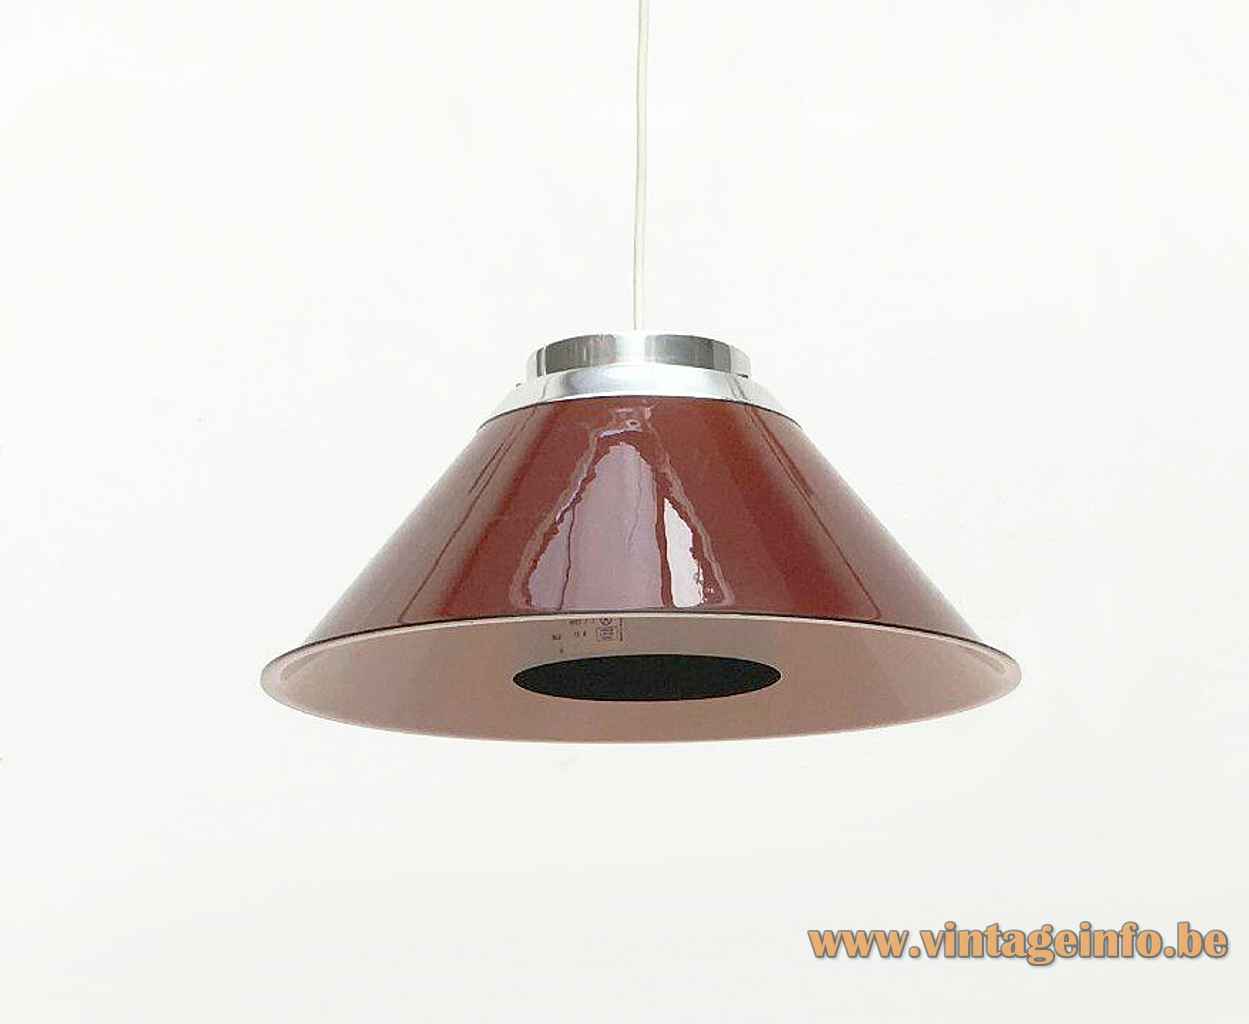 Ateljé Lyktan Mars pendant lamp 1972 design: Per Sundstedt conical degrading orange acrylic lampshade Sweden 1970s